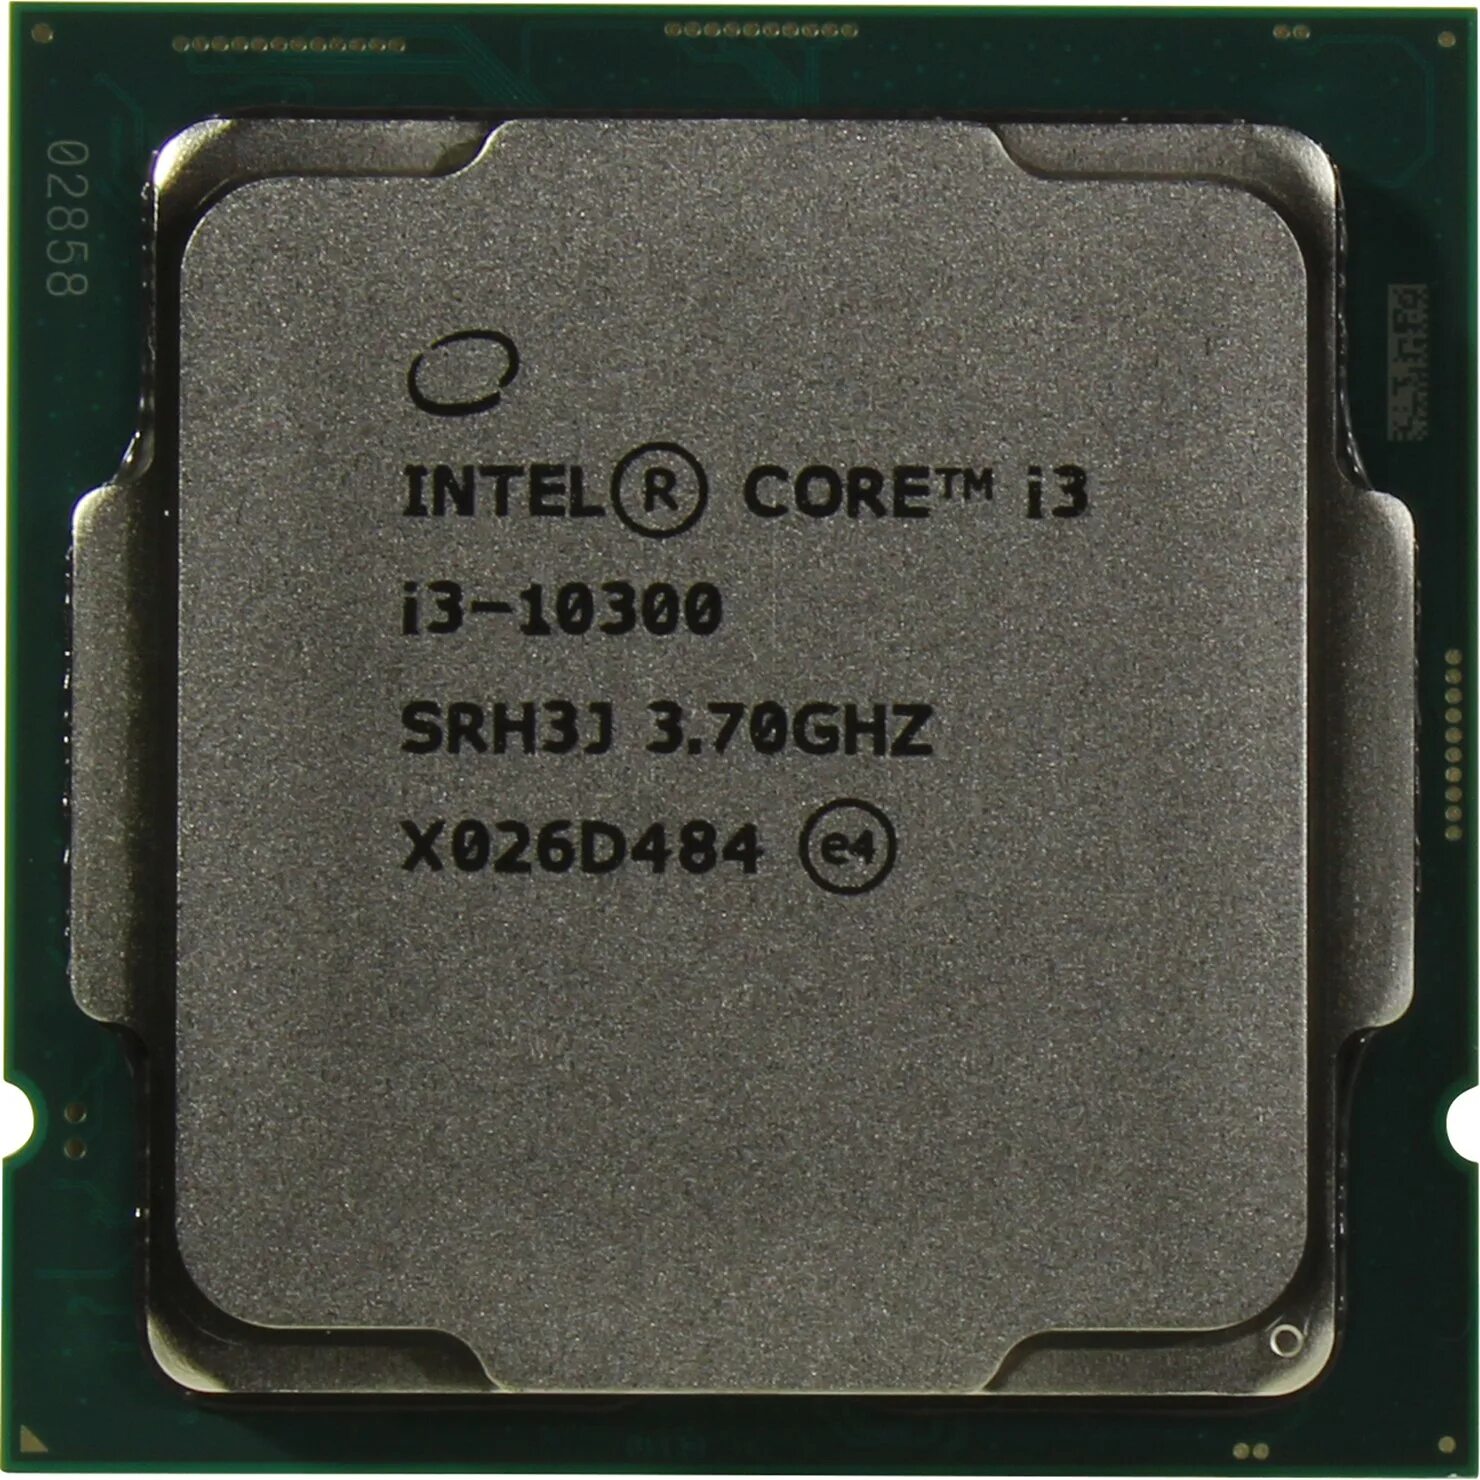 Купить интел 3. Процессор Intel XEONE-2274g. Intel Core i3 10300. Intel cm8066201920404sr2l6. Процессор Pentium g4400.